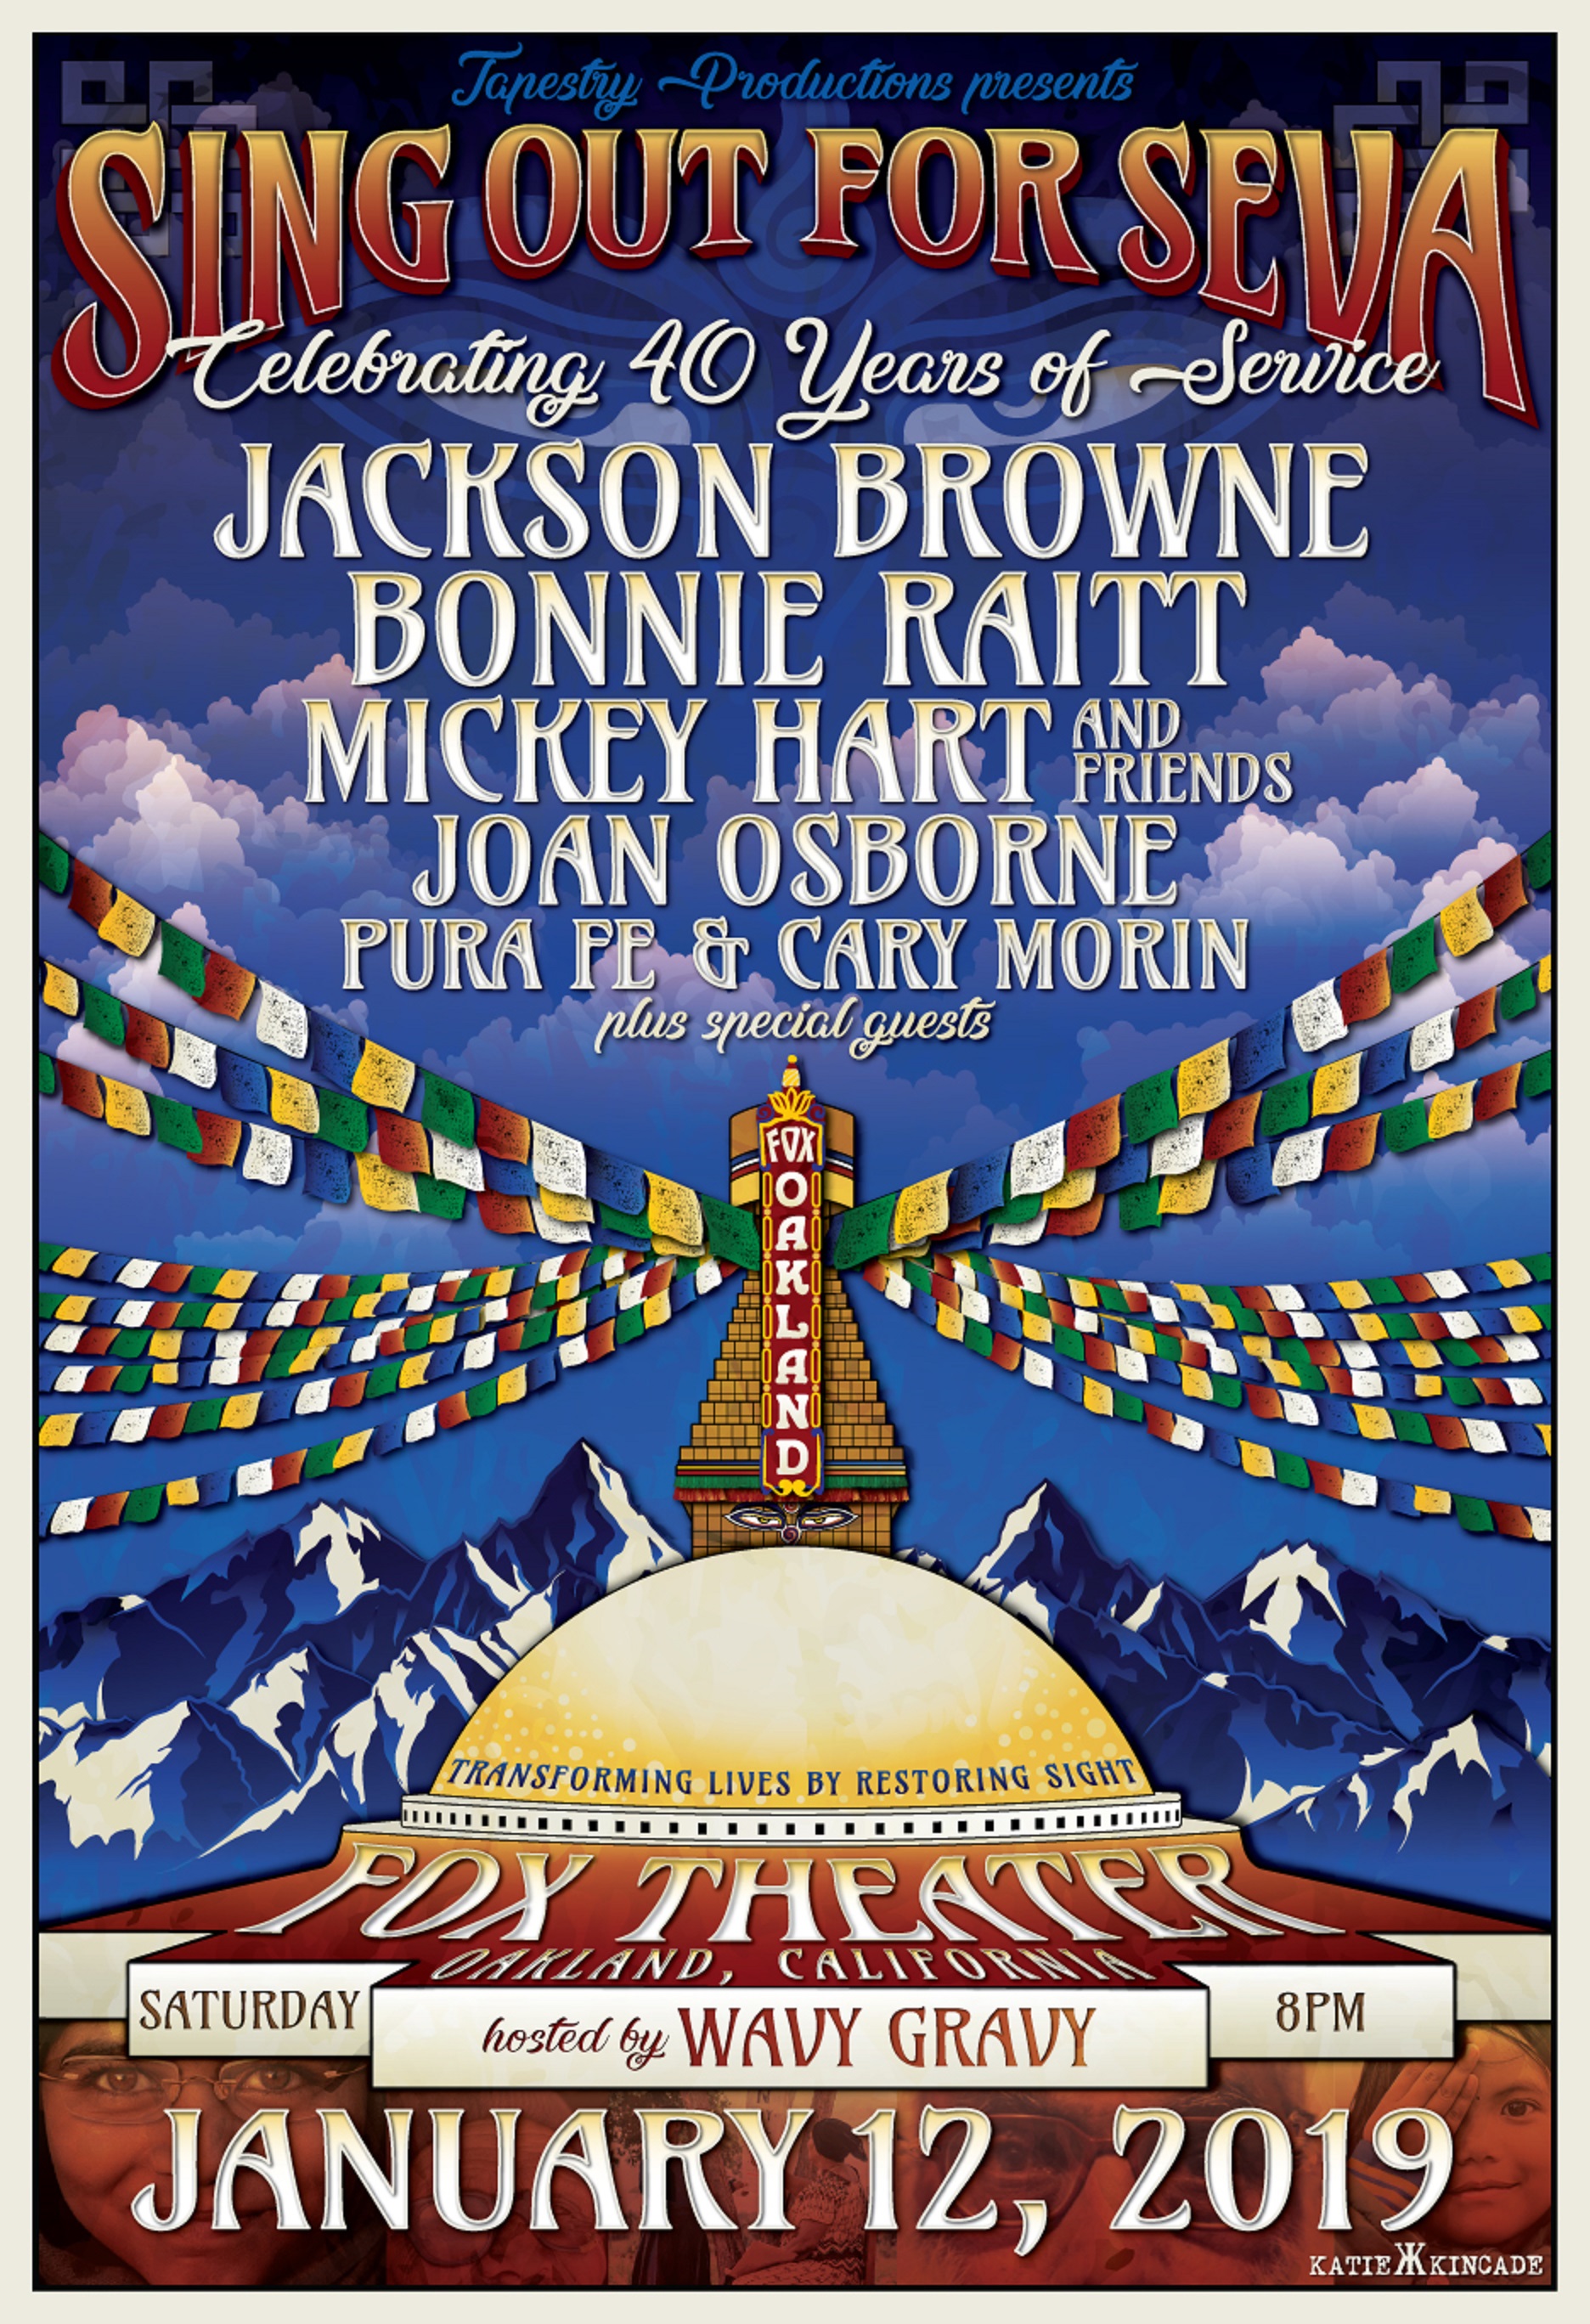 40 Years of Benefit Concerts for Seva - Jackson Browne, Bonnie Raitt to Play Anniversary